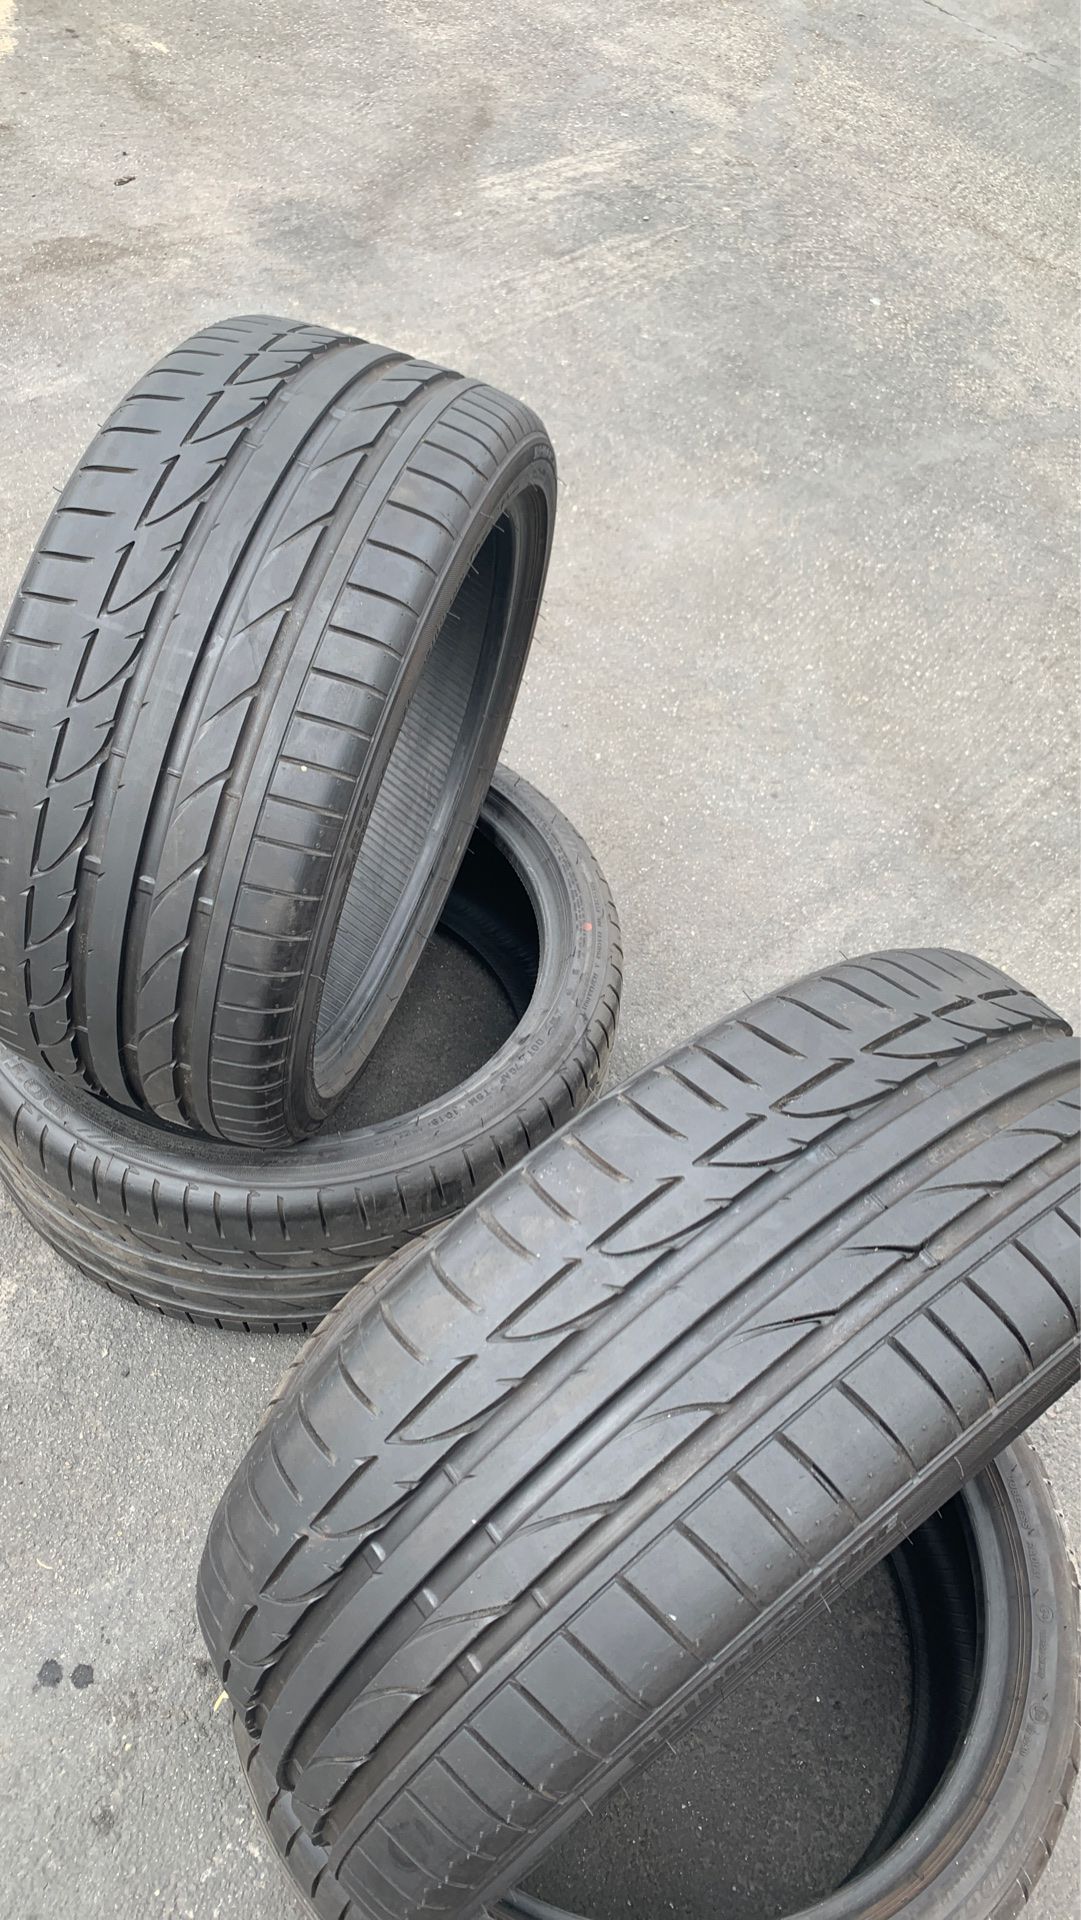 225/40/19 and 255/35/19 Bridgestone potenza tires new take off potenza 2019 tires